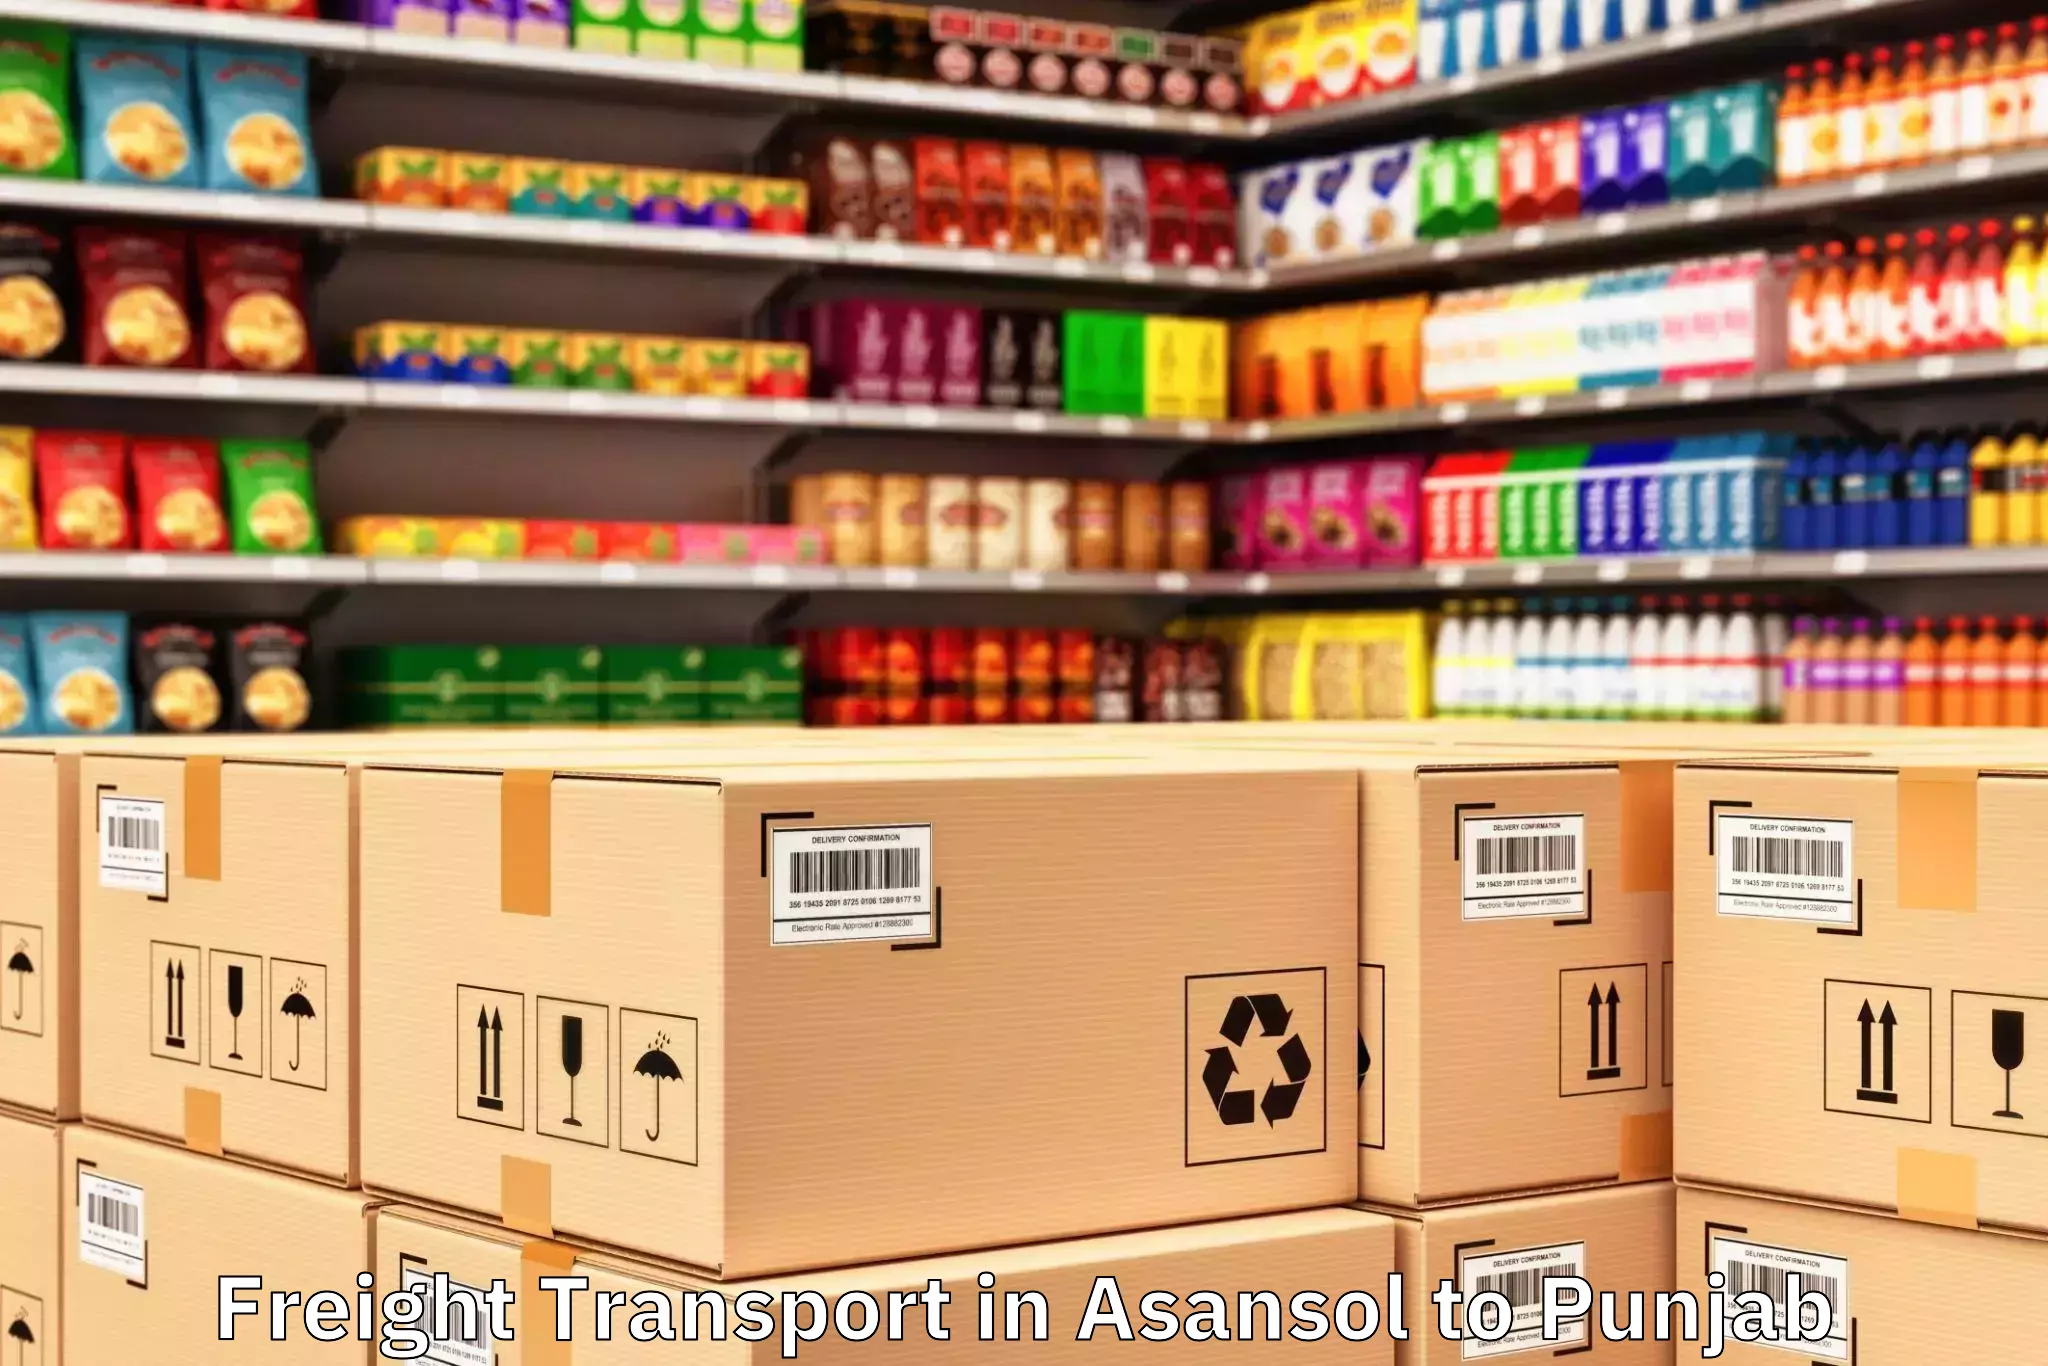 Hassle-Free Asansol to Dhuri Freight Transport